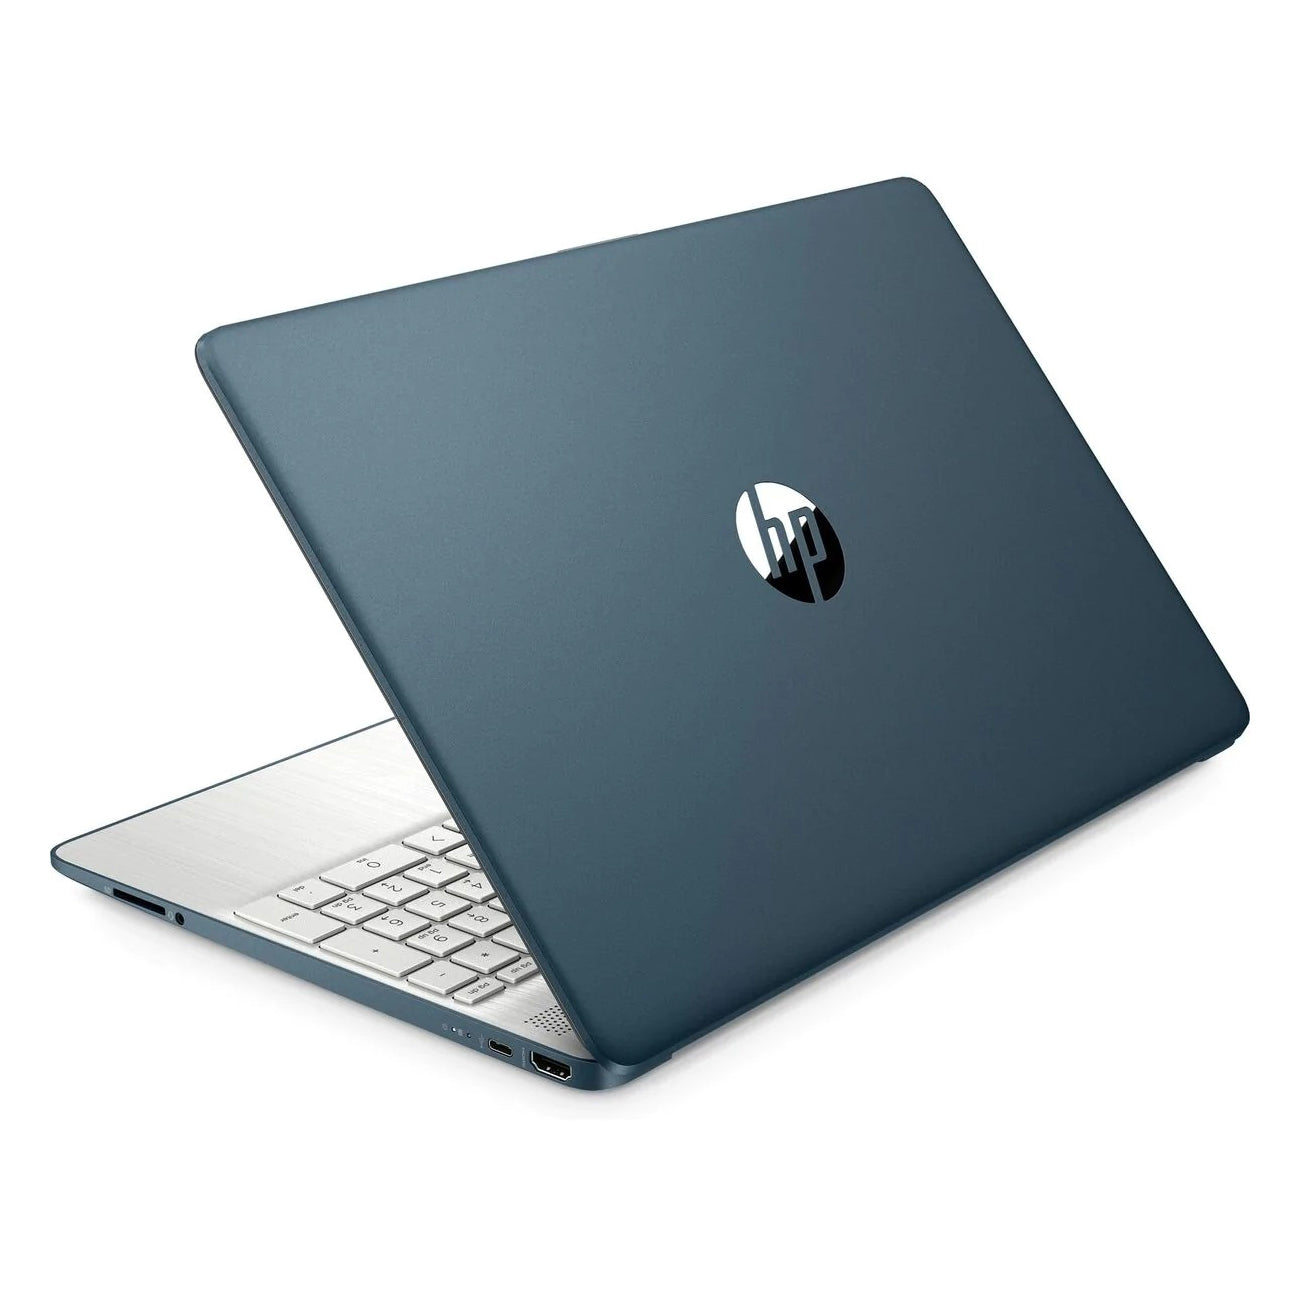 Hp 15-DY2762WM-R Core i7-1165g7 Iris Xe 15.6" Laptops (New OB)